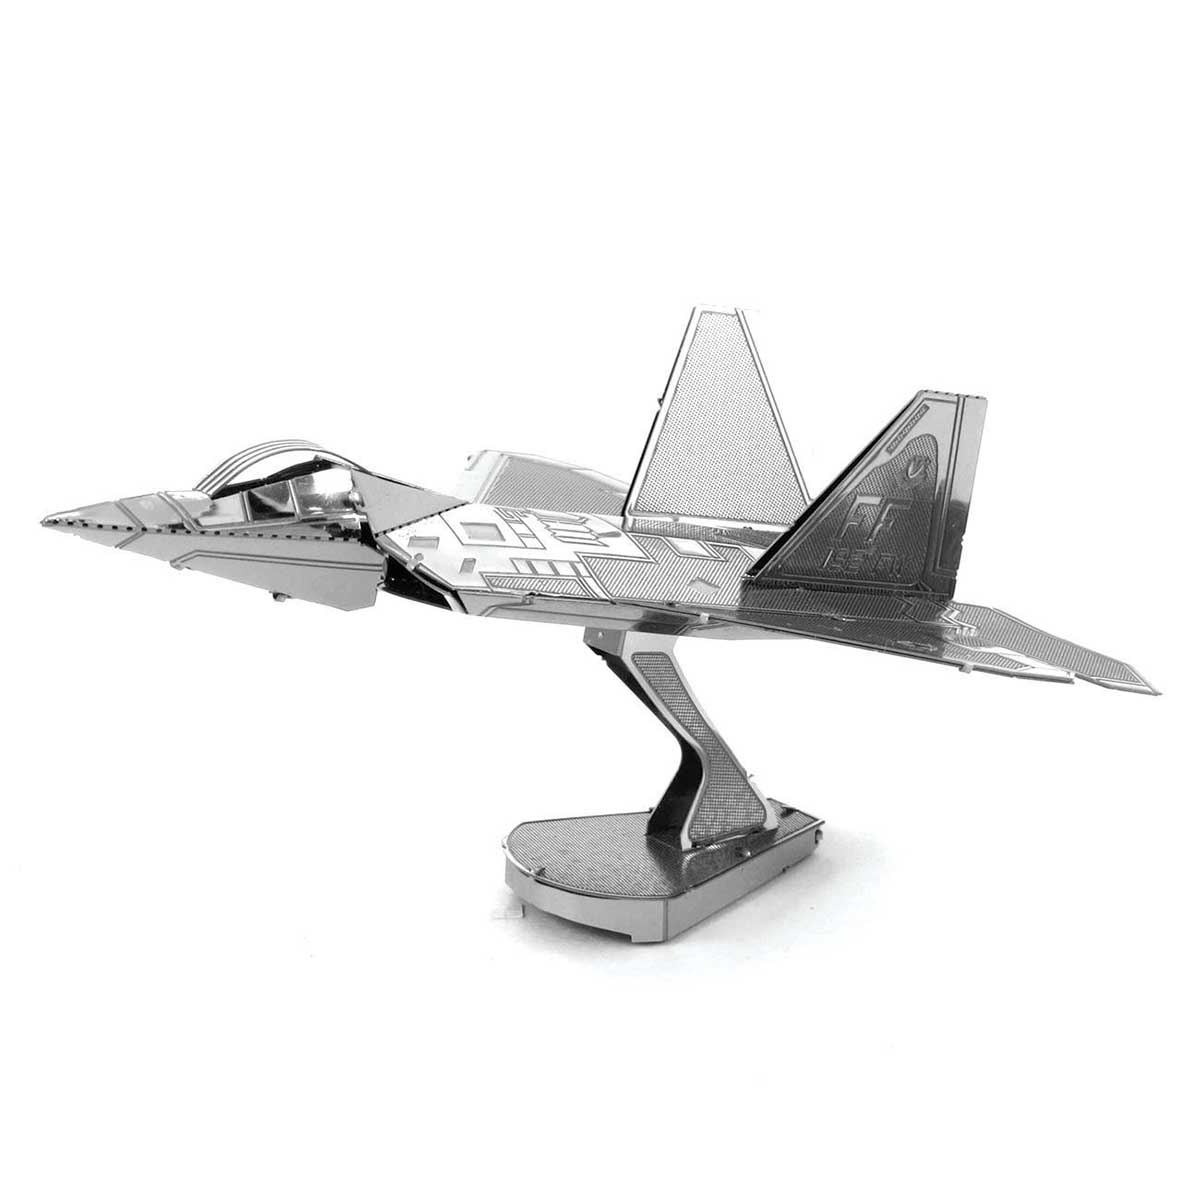 Fascinations Metal Earth 3D Metal Model Kit Bundle - Wright Brothers  Airplane - F4U Corsair - Metal Earth 3D Metal Model Kit Bundle - Wright  Brothers Airplane - F4U Corsair . Buy